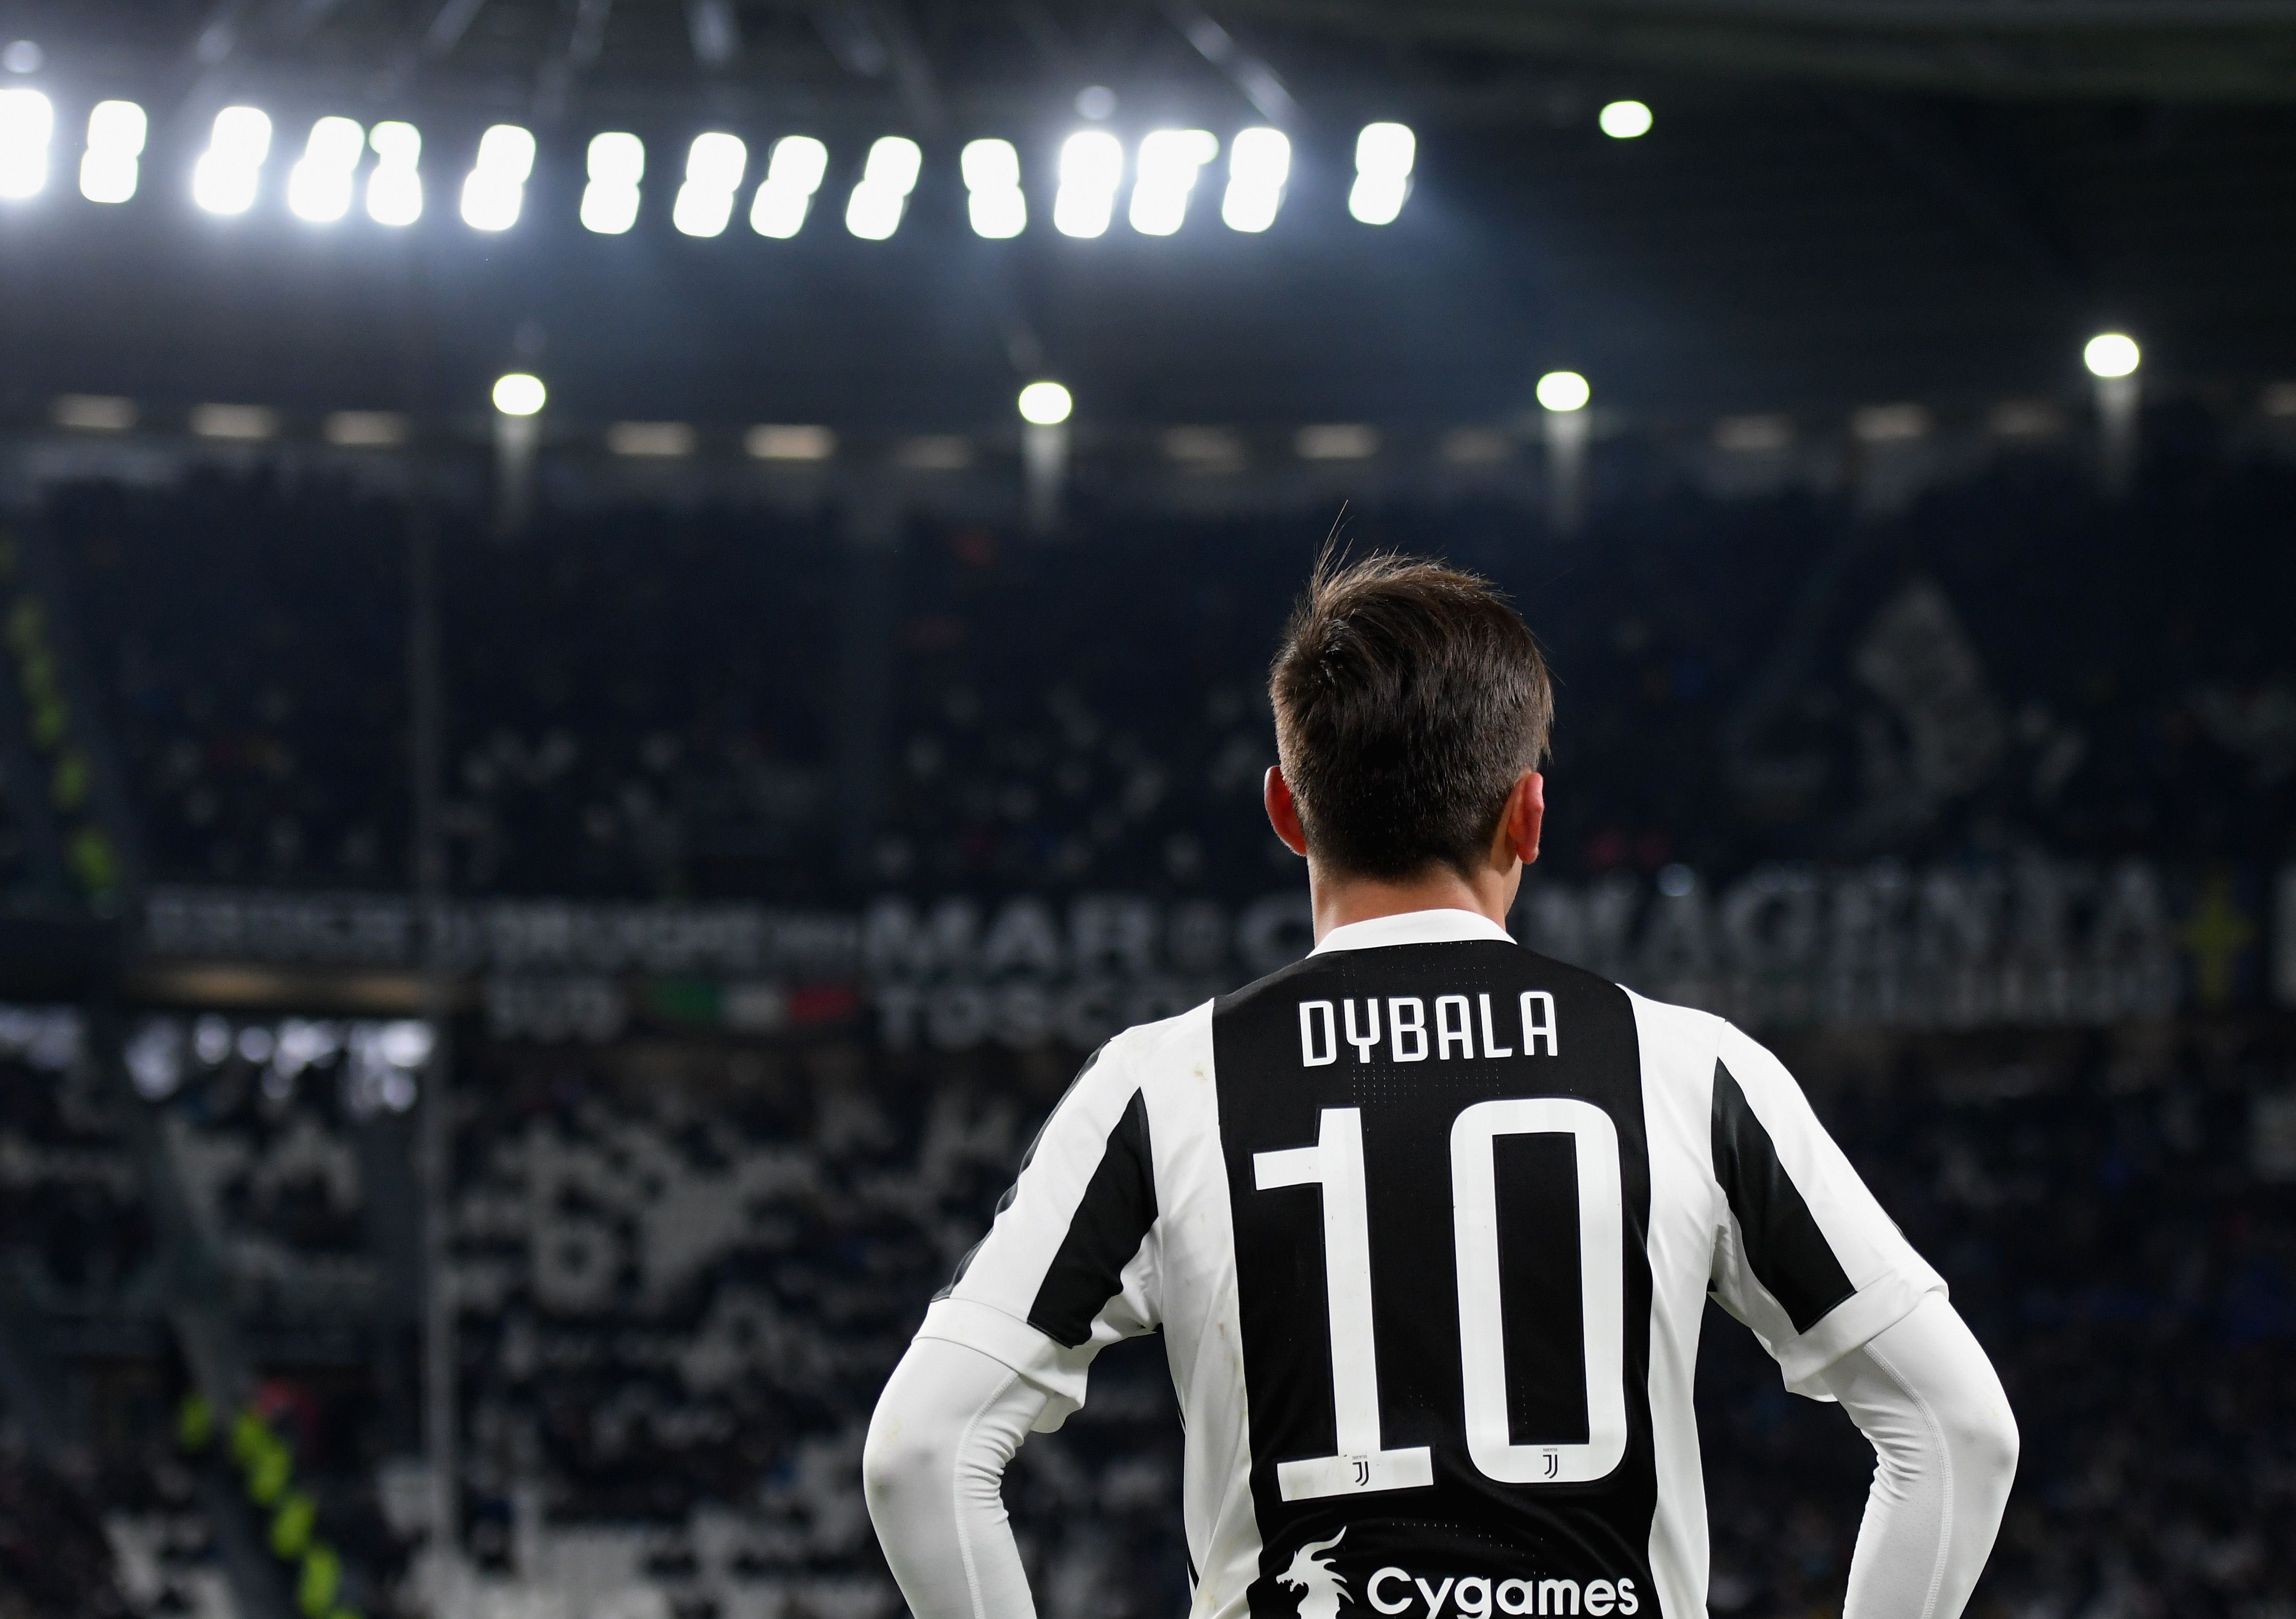 Paulo Dybala to renew to 2025 -Juvefc.com